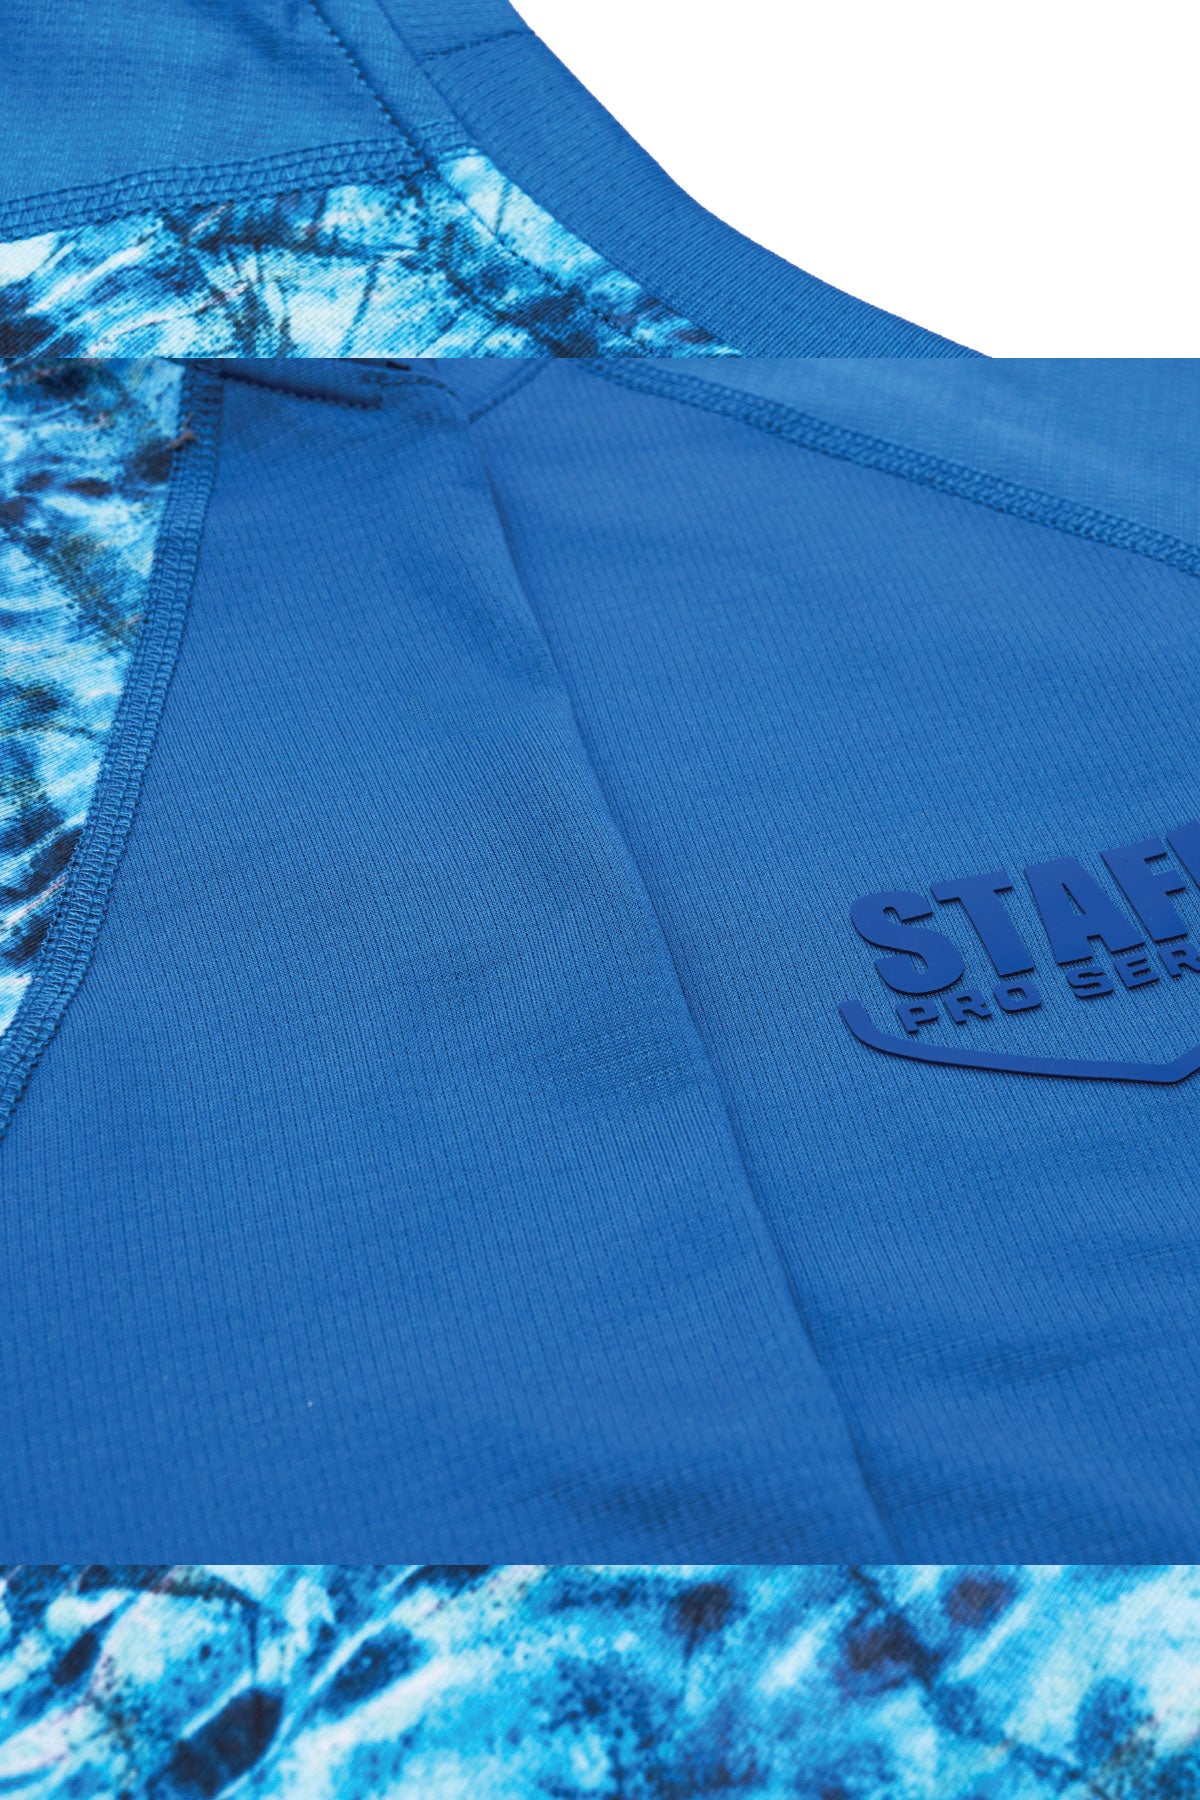 Vamos Short Sleeve Fishing Shirt - Blue - Stafu Pro Series